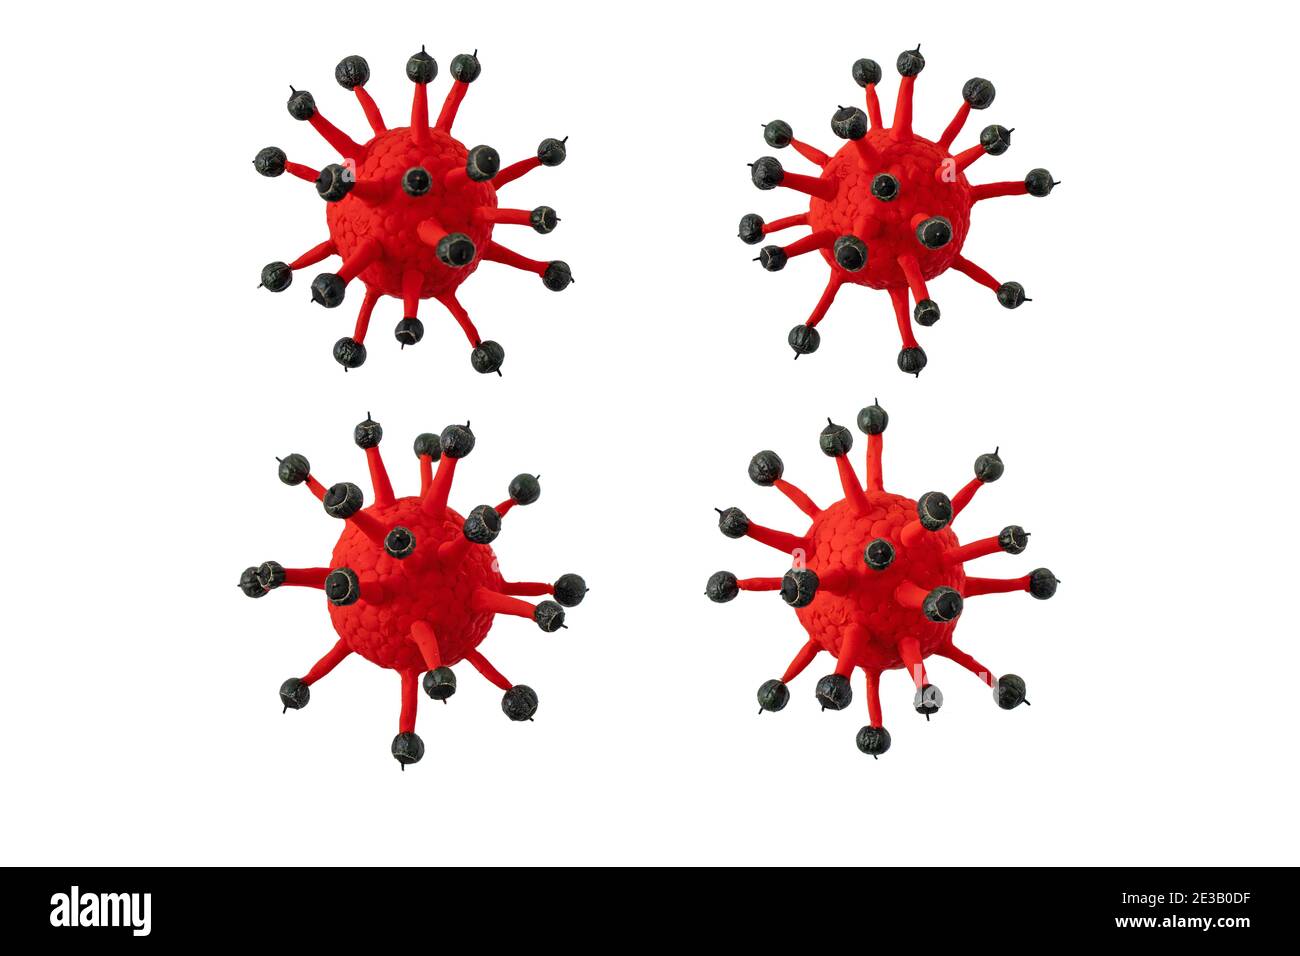 Coronavirus cells set isolated on white. Covid-19 virions 3d illustration. Stock Photo